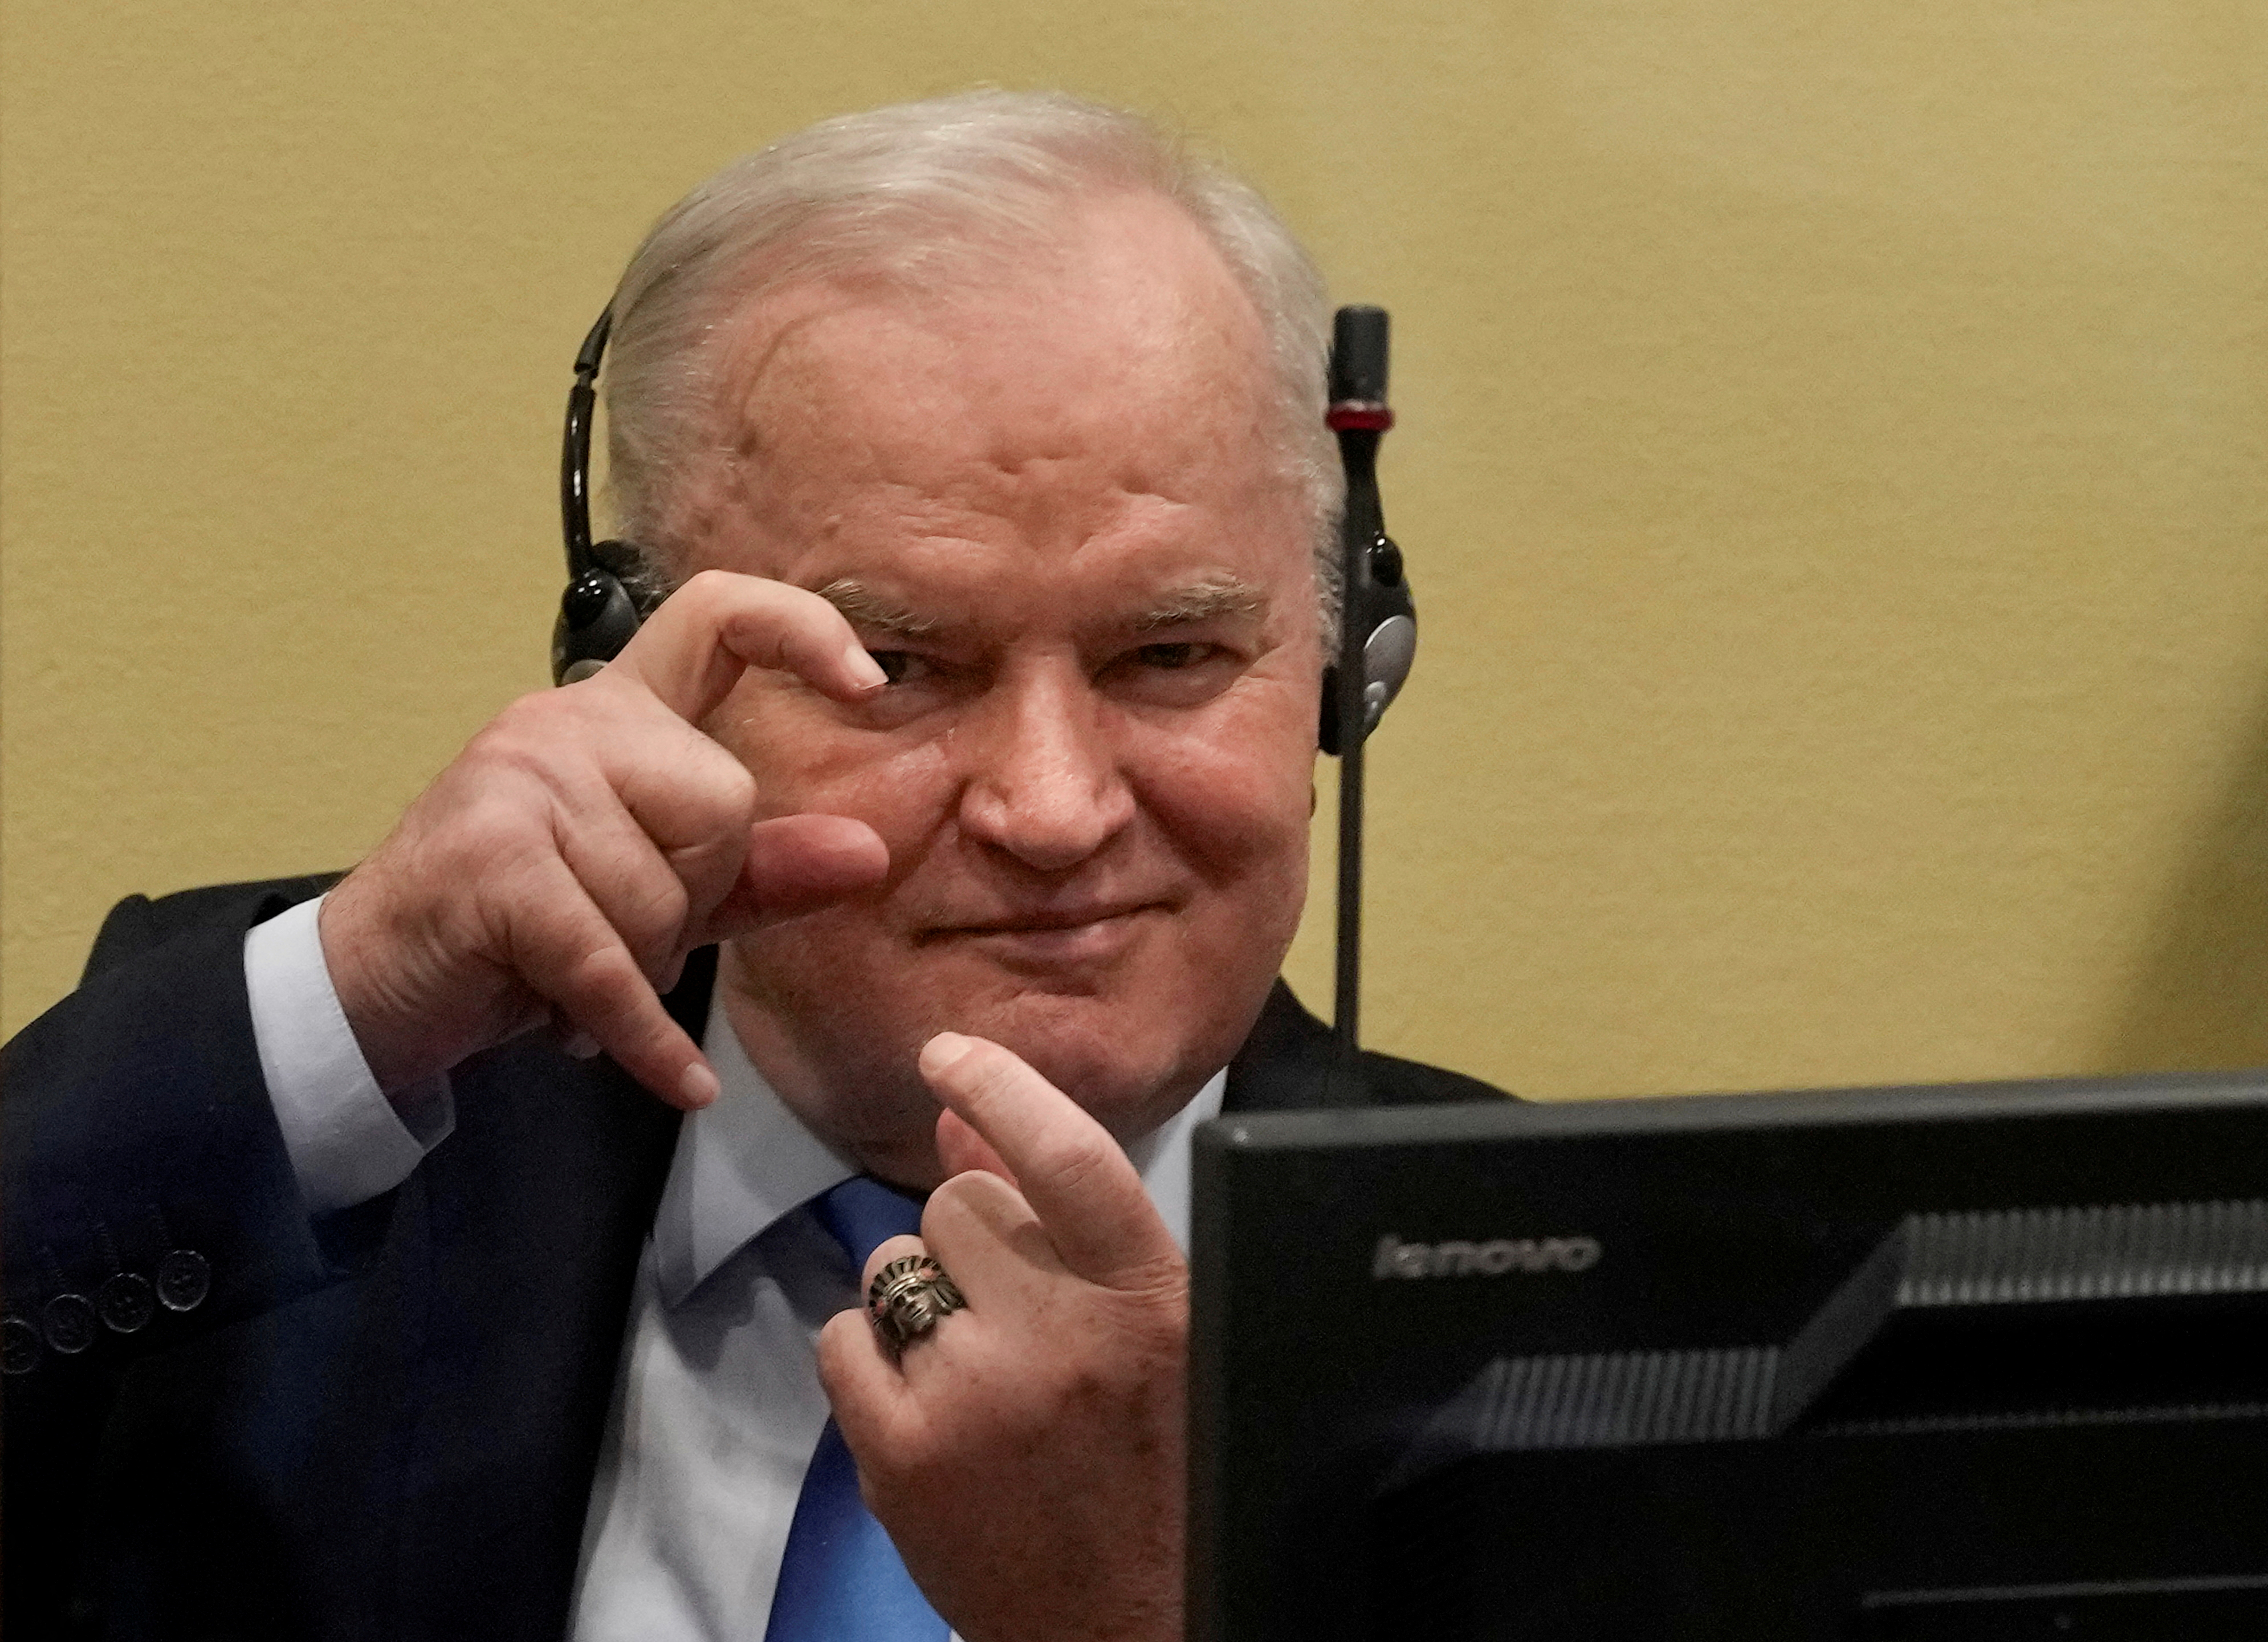 Former Bosnian Serb commander Mladic appeal judgement at UN court in The Hague